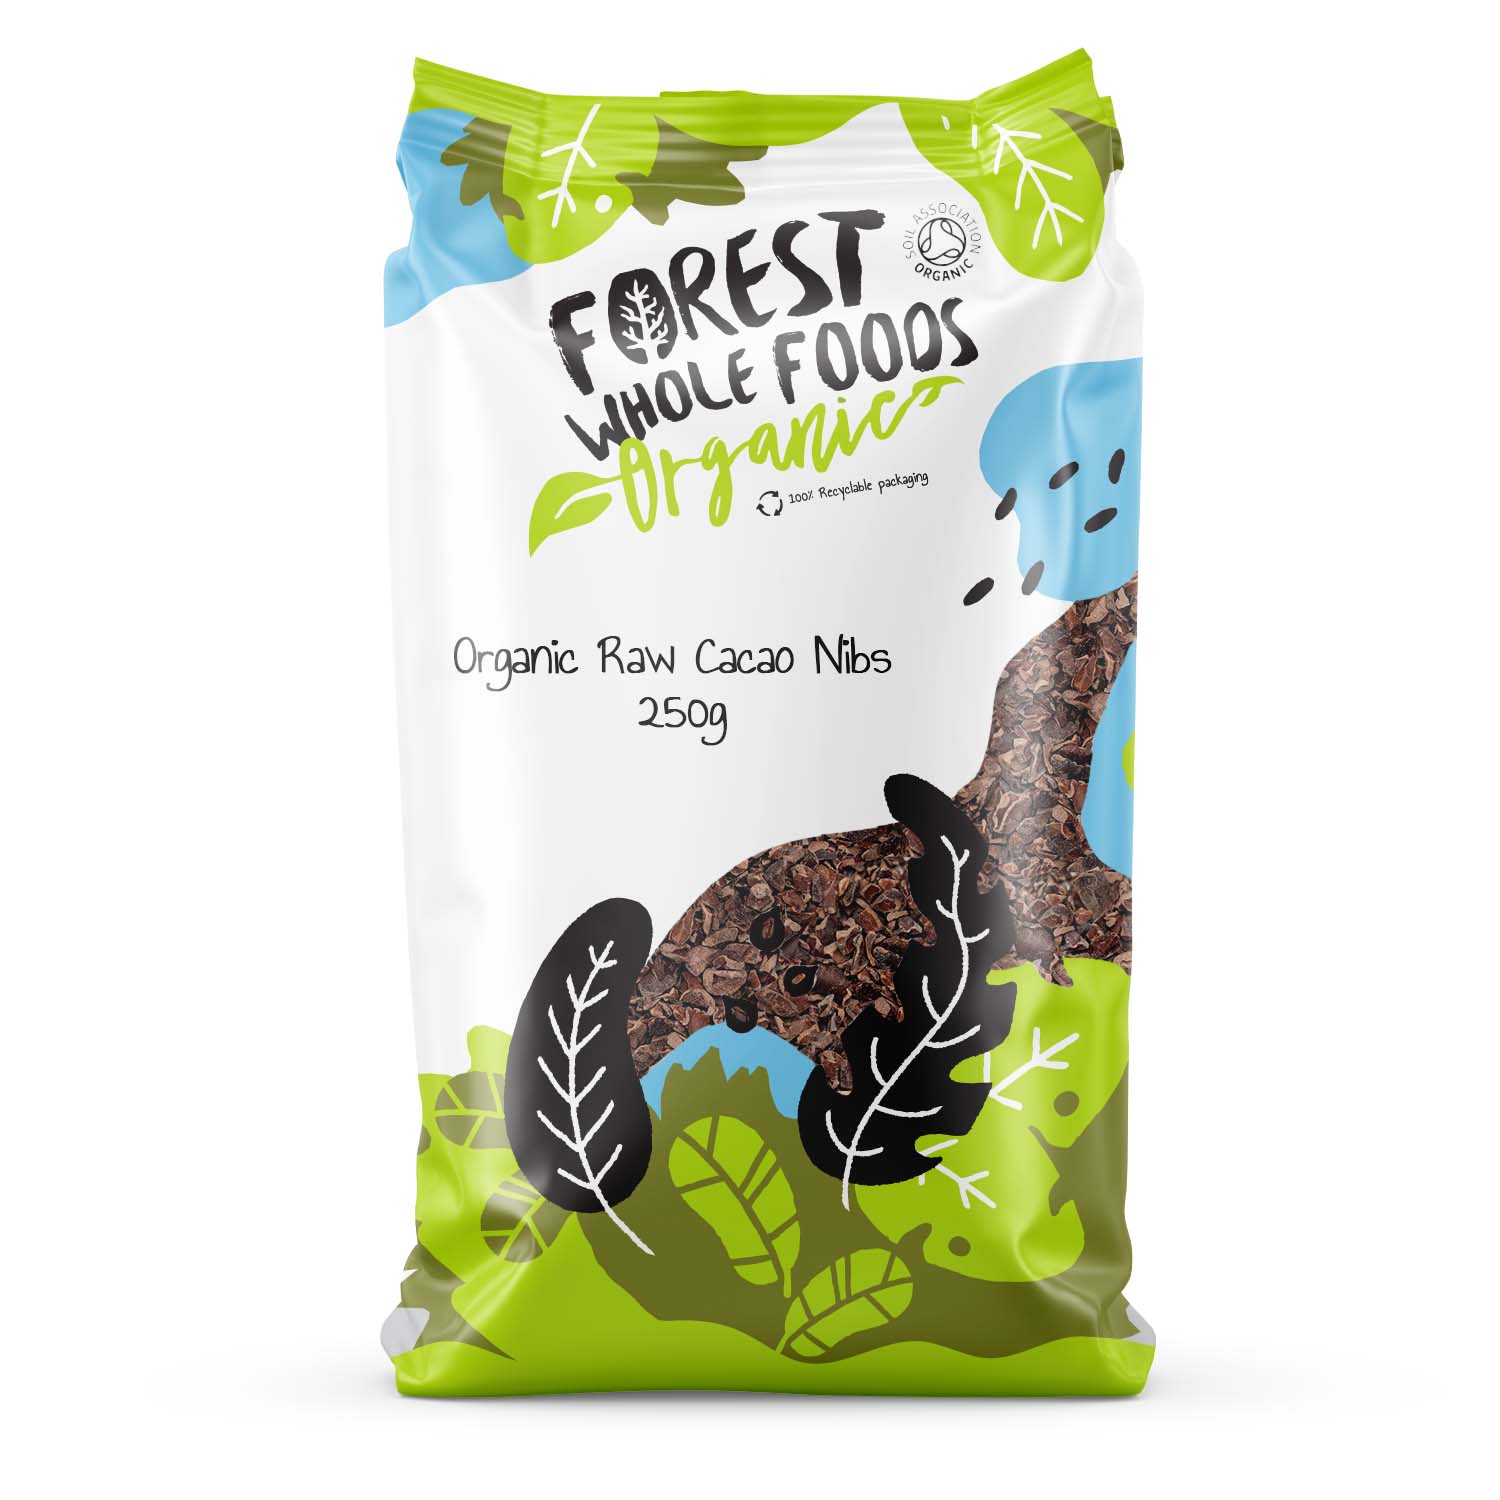 Organic raw cacao powder - Sevenhills Wholefoods - 1 kg